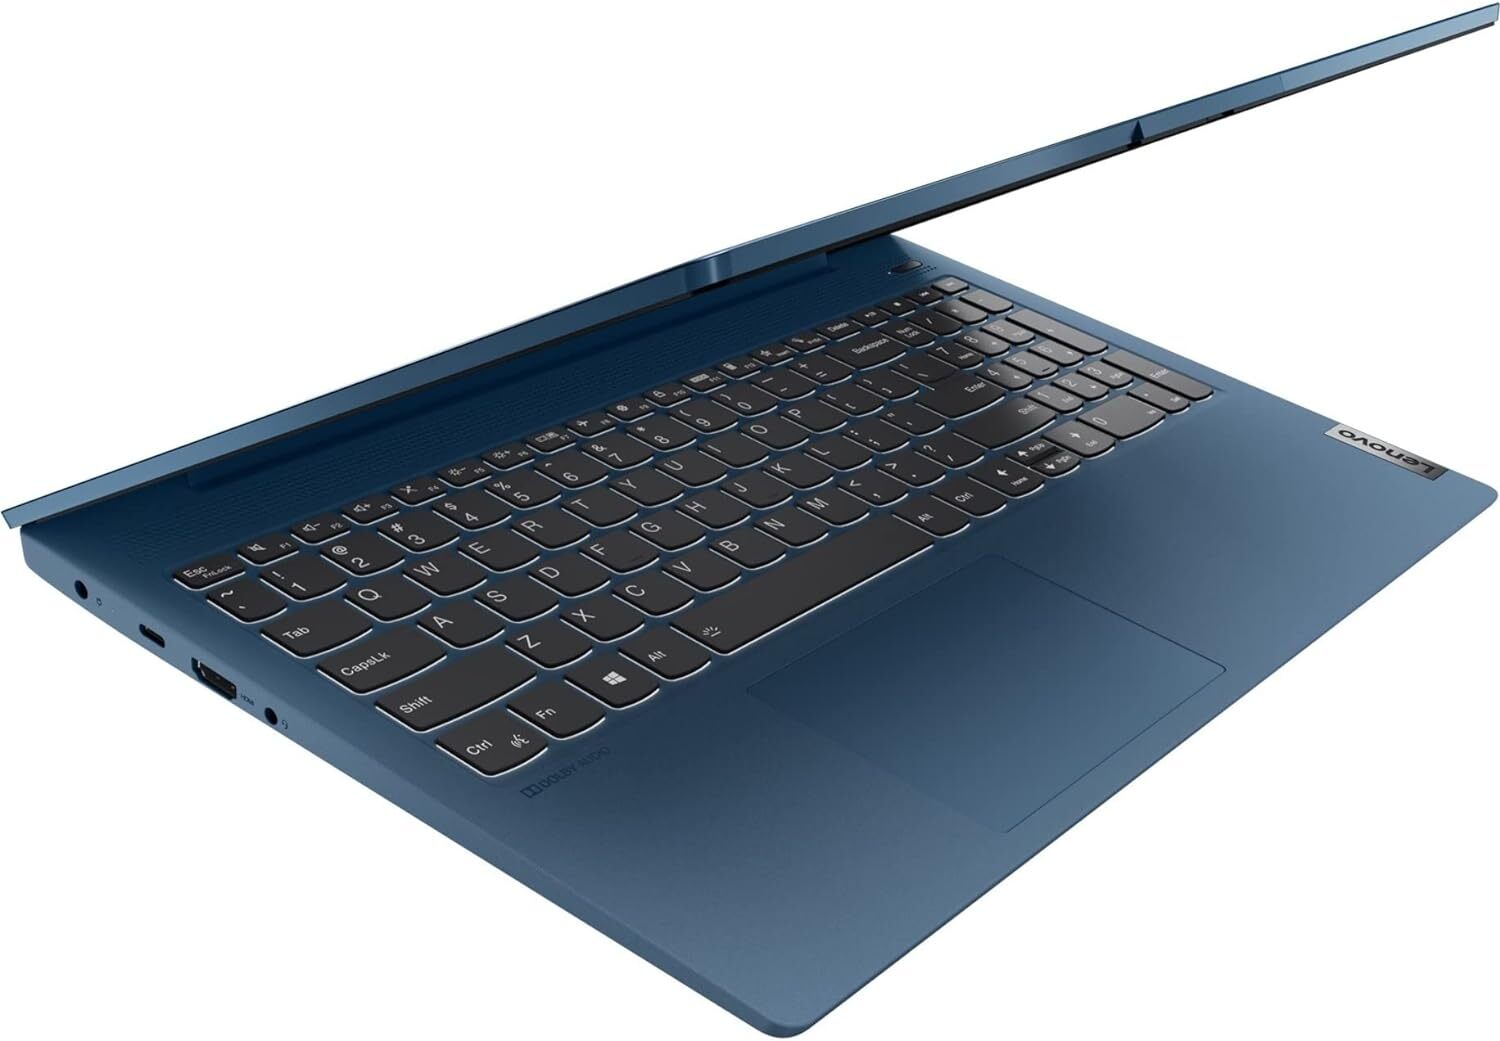  قیمت لپ تاپ IdeaPad 5 i5 1035G1 | لاکچری لپ تاپ 